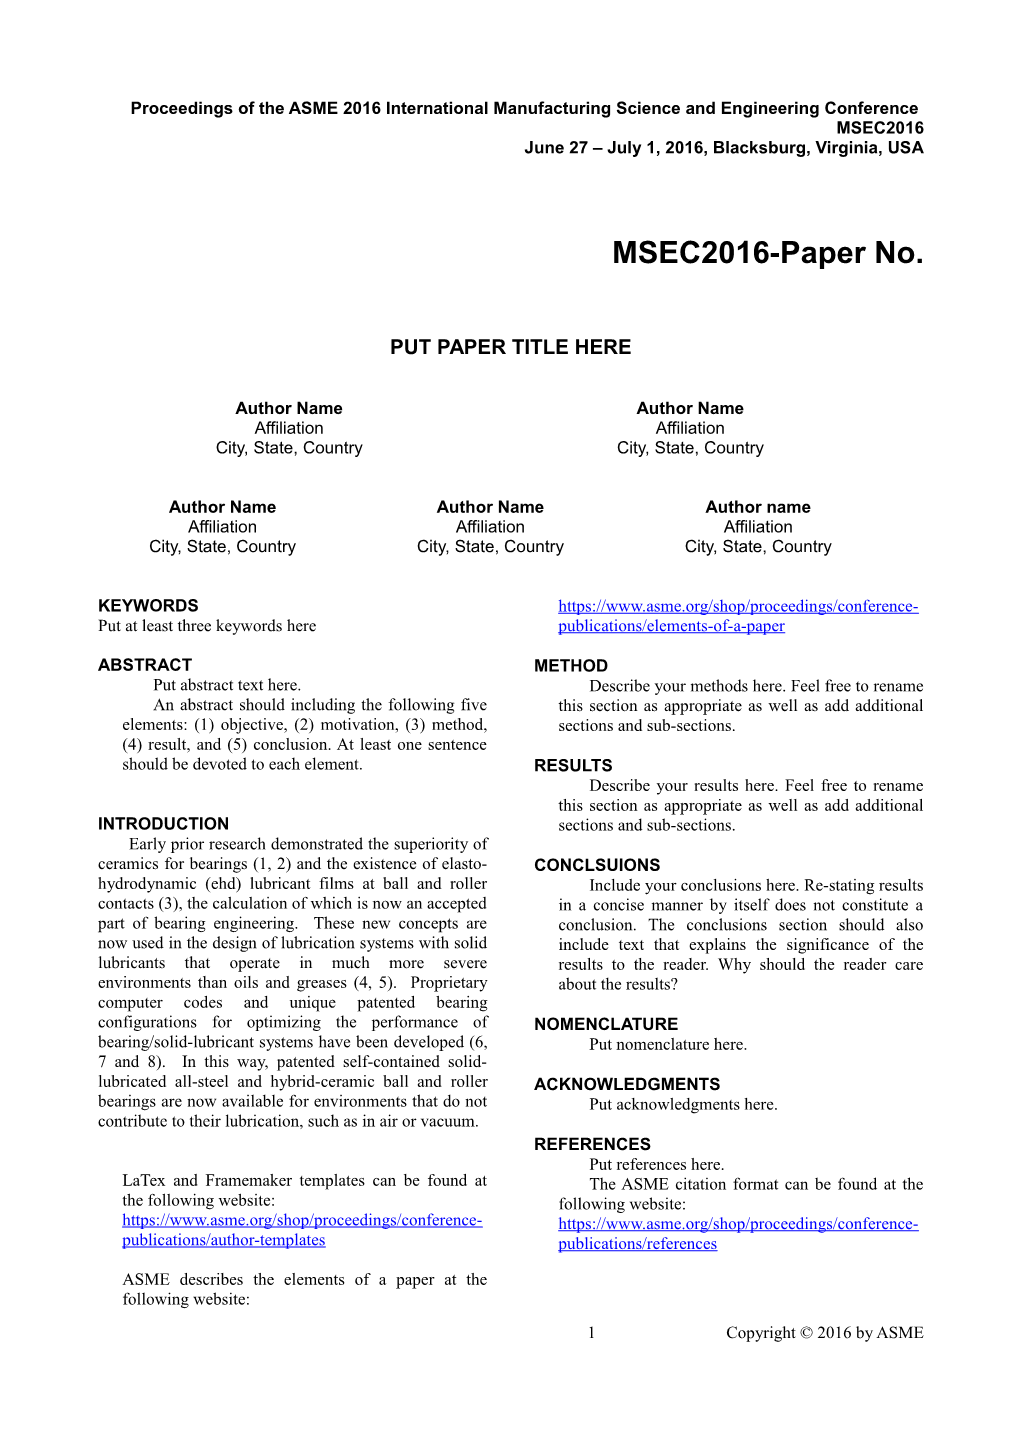 MSEC 2016 Paper Template